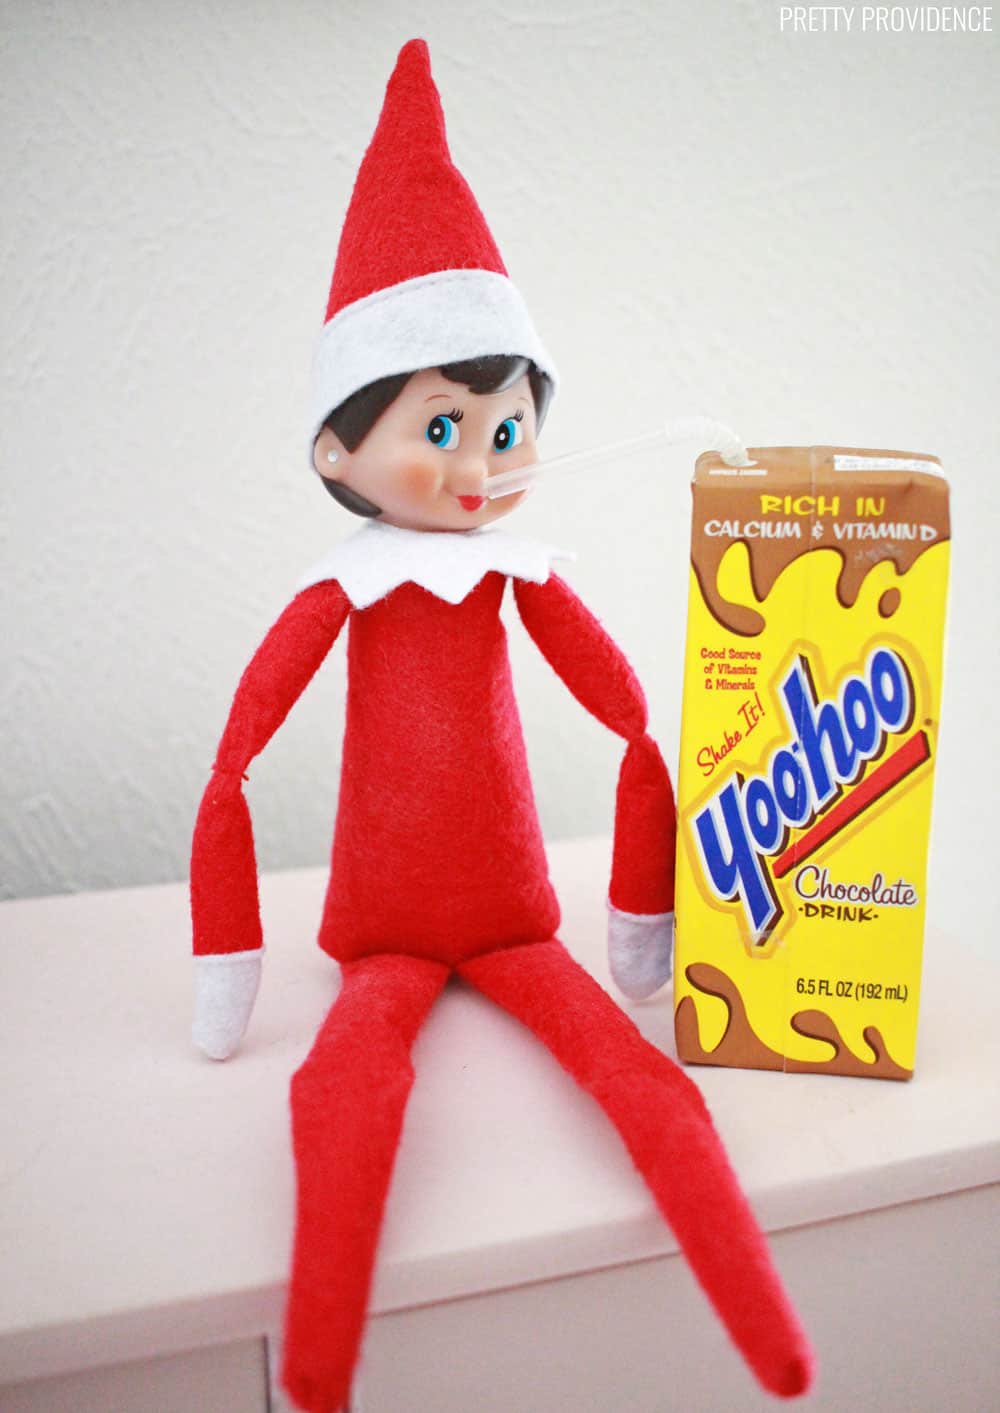 Funny Elf on the Shelf Ideas - Drinks Yoohoo